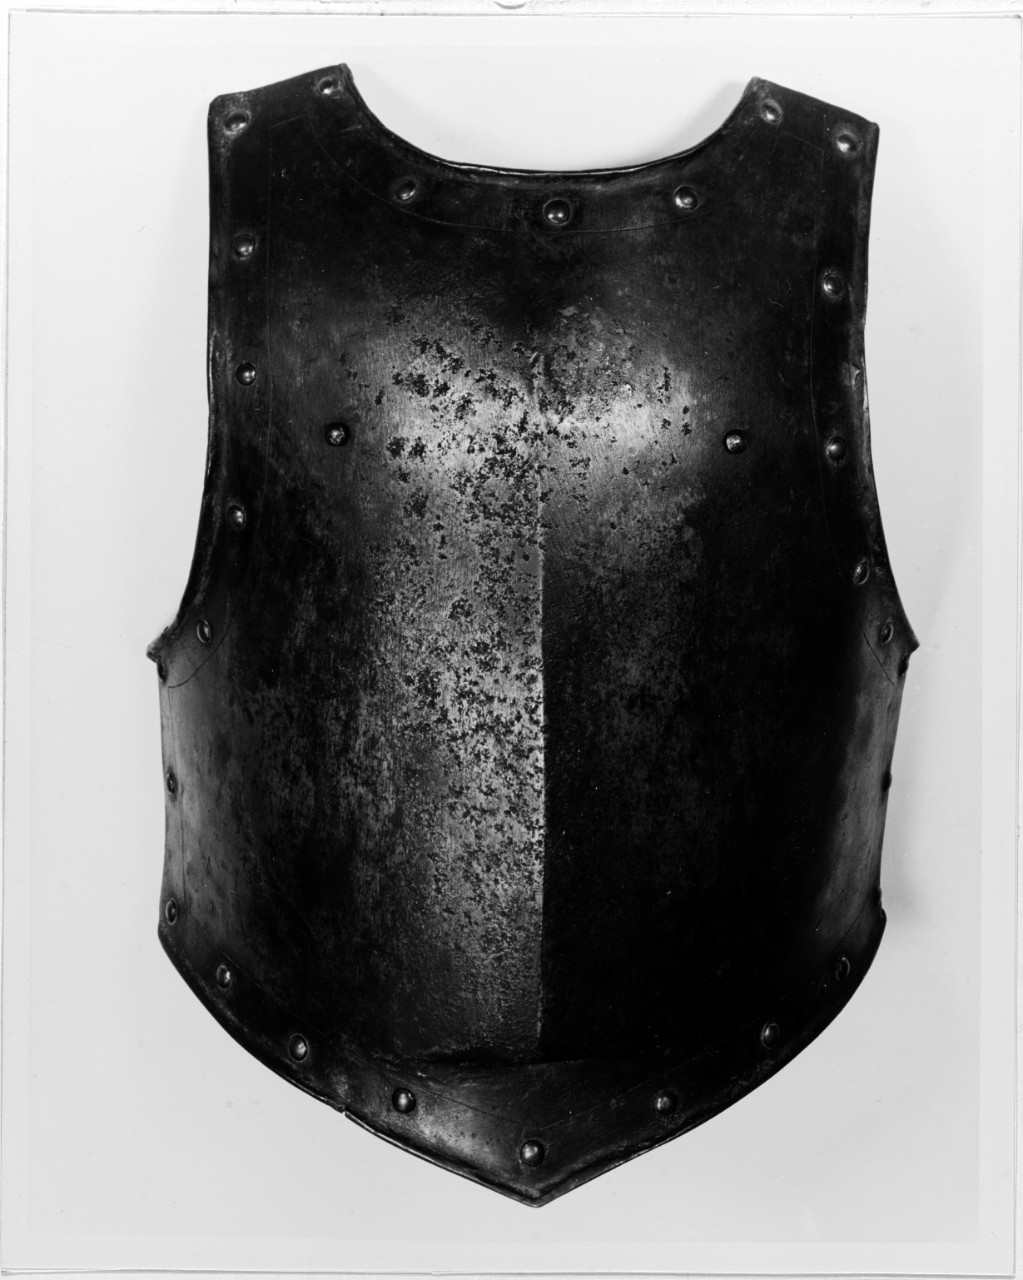 The front part of the body armor of John Paul Jones